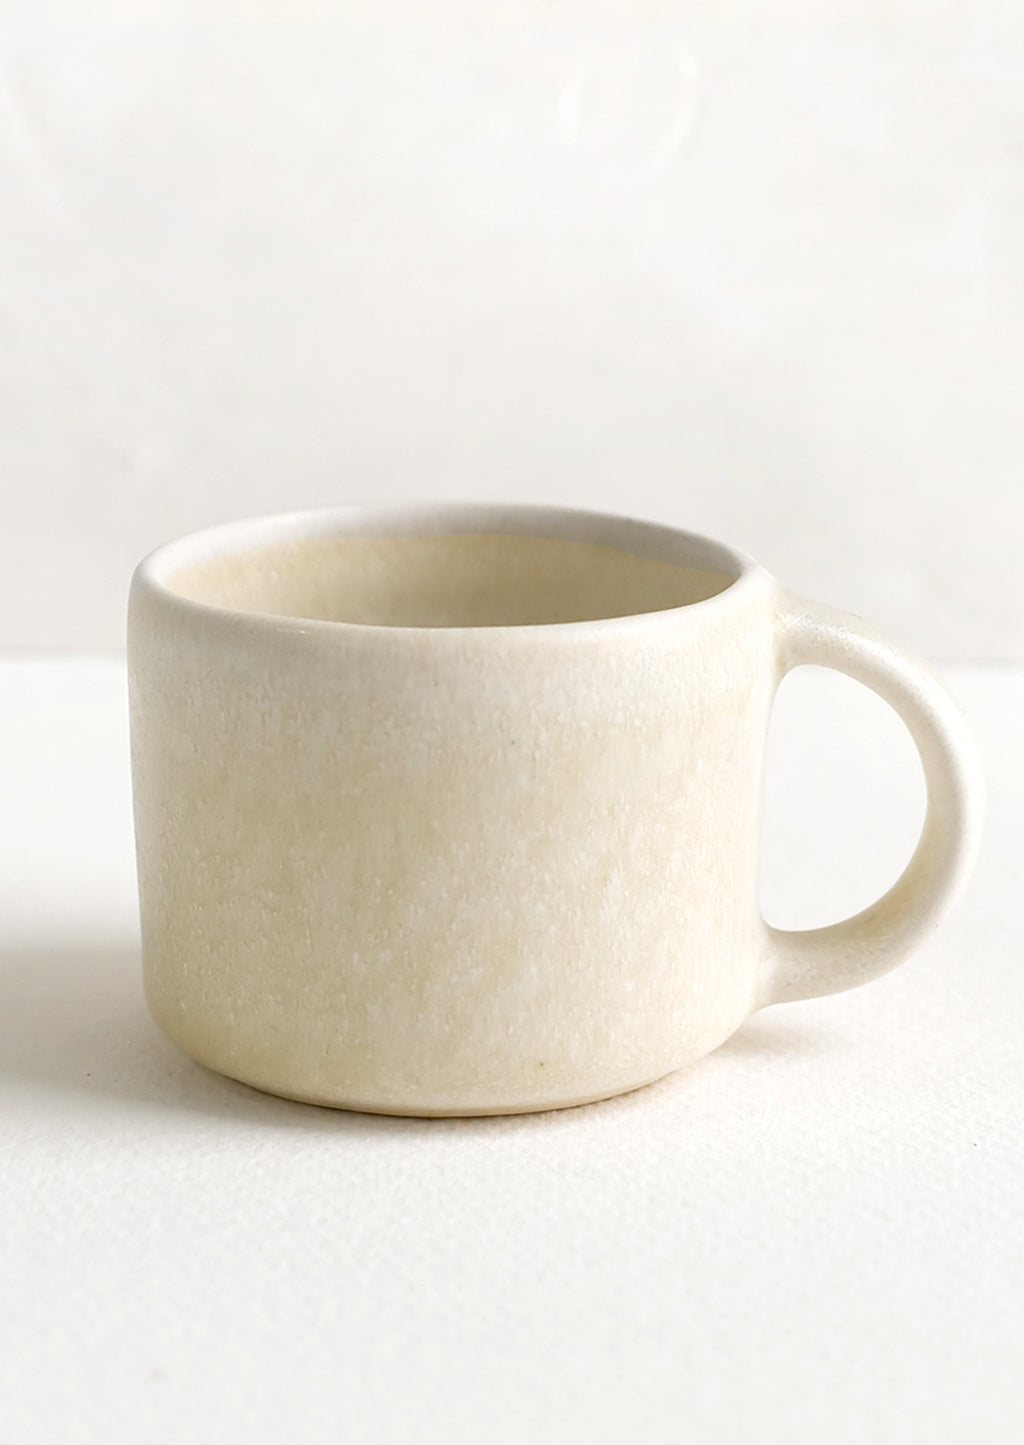 2: A ceramic espresso mug with handle in neutral ivory glaze.